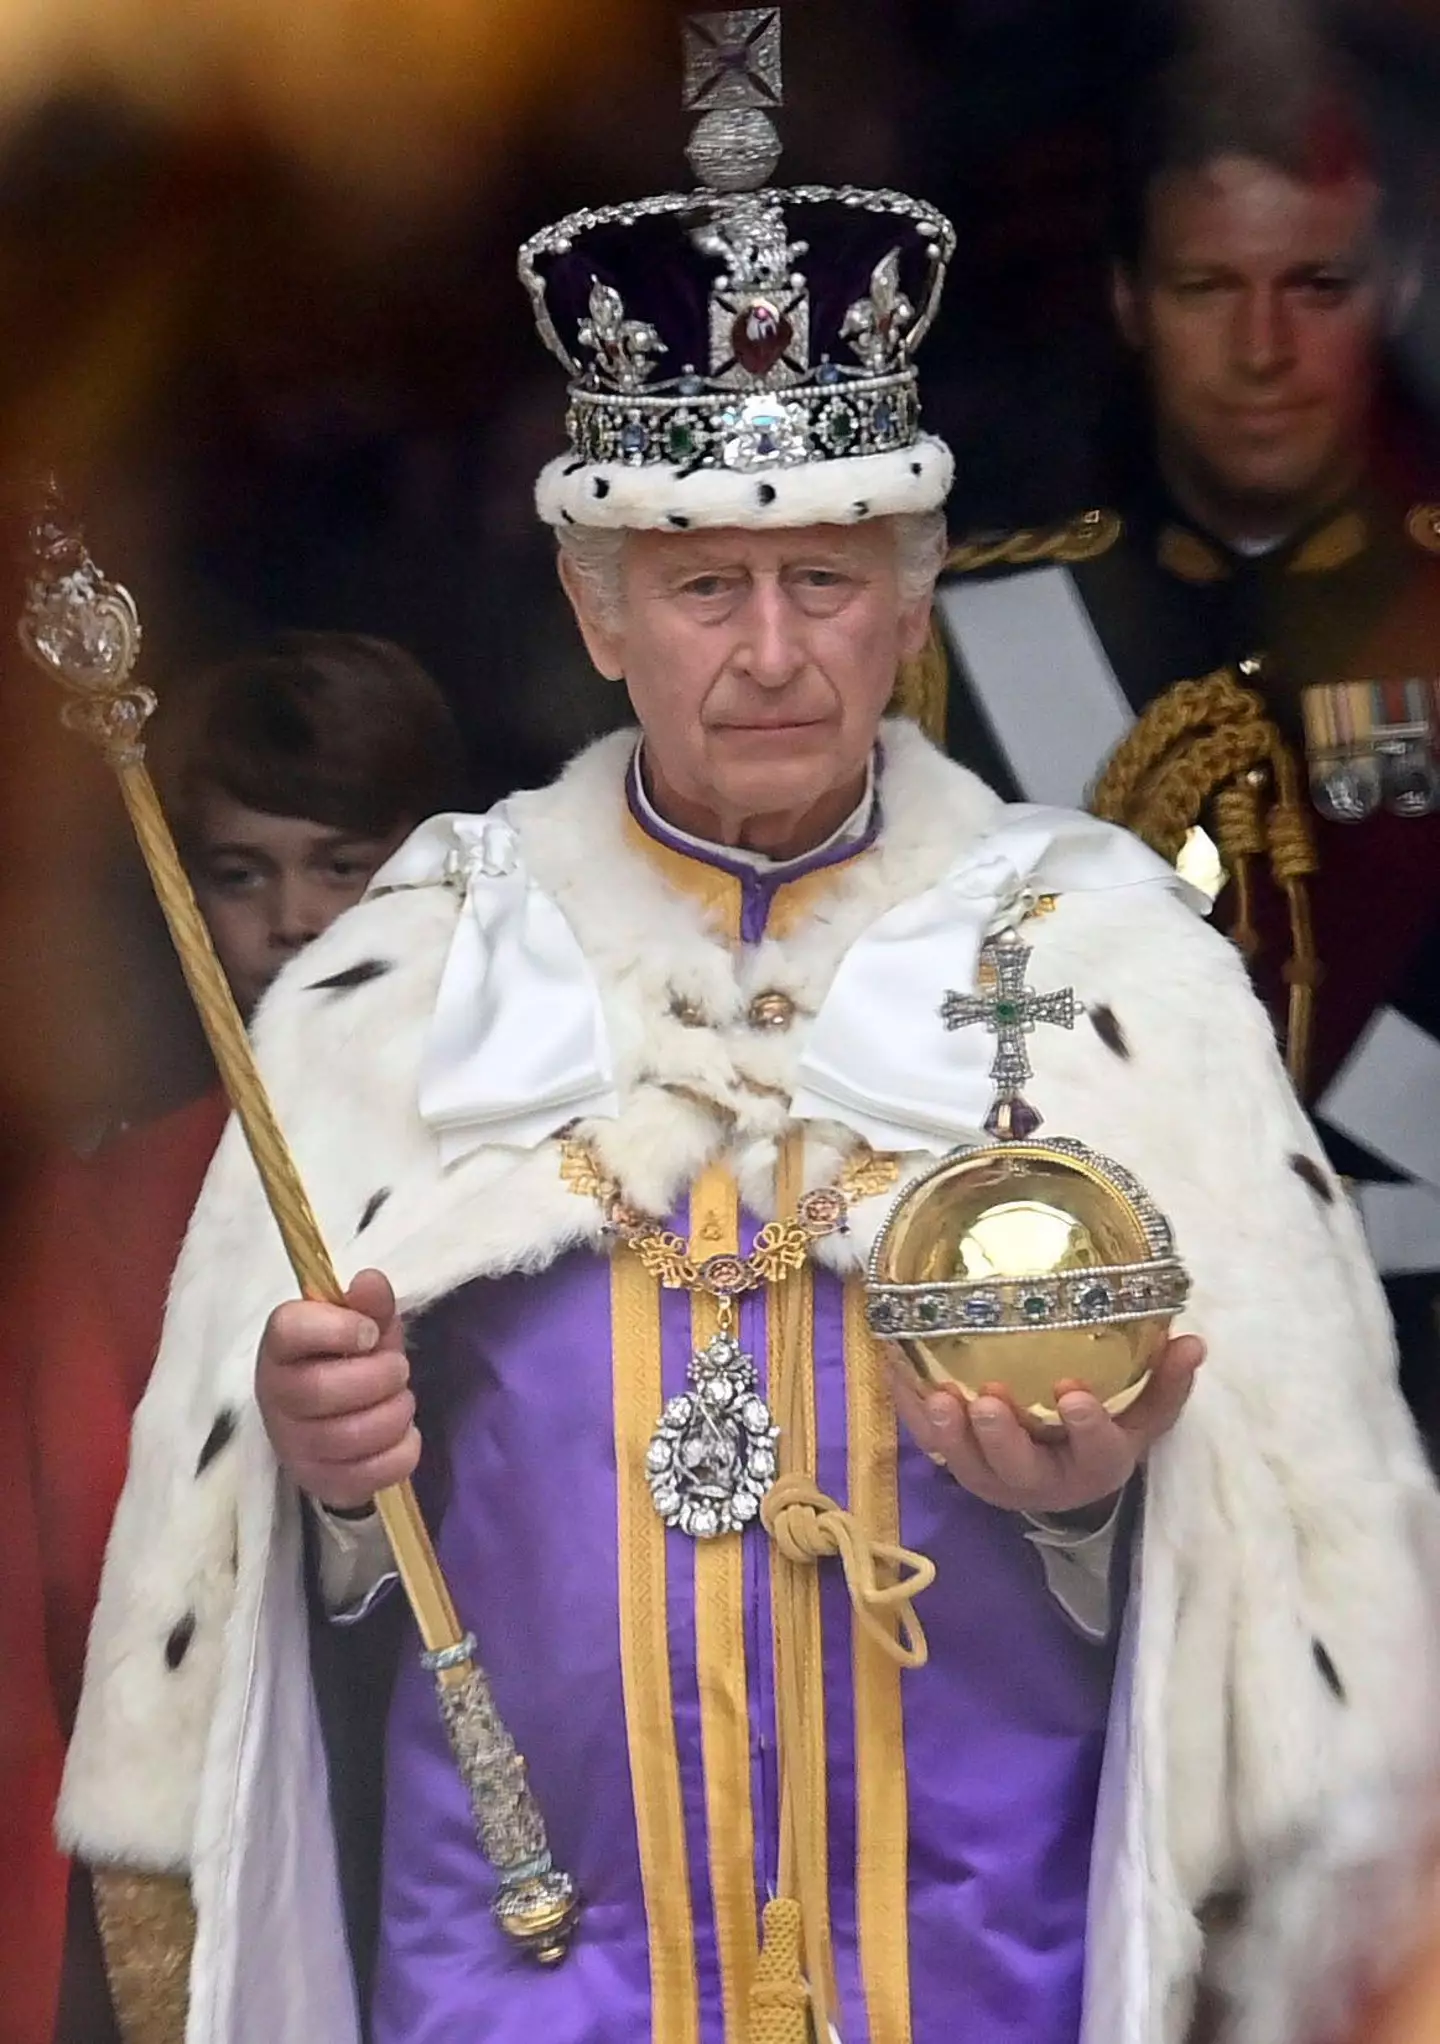 King Charles III.